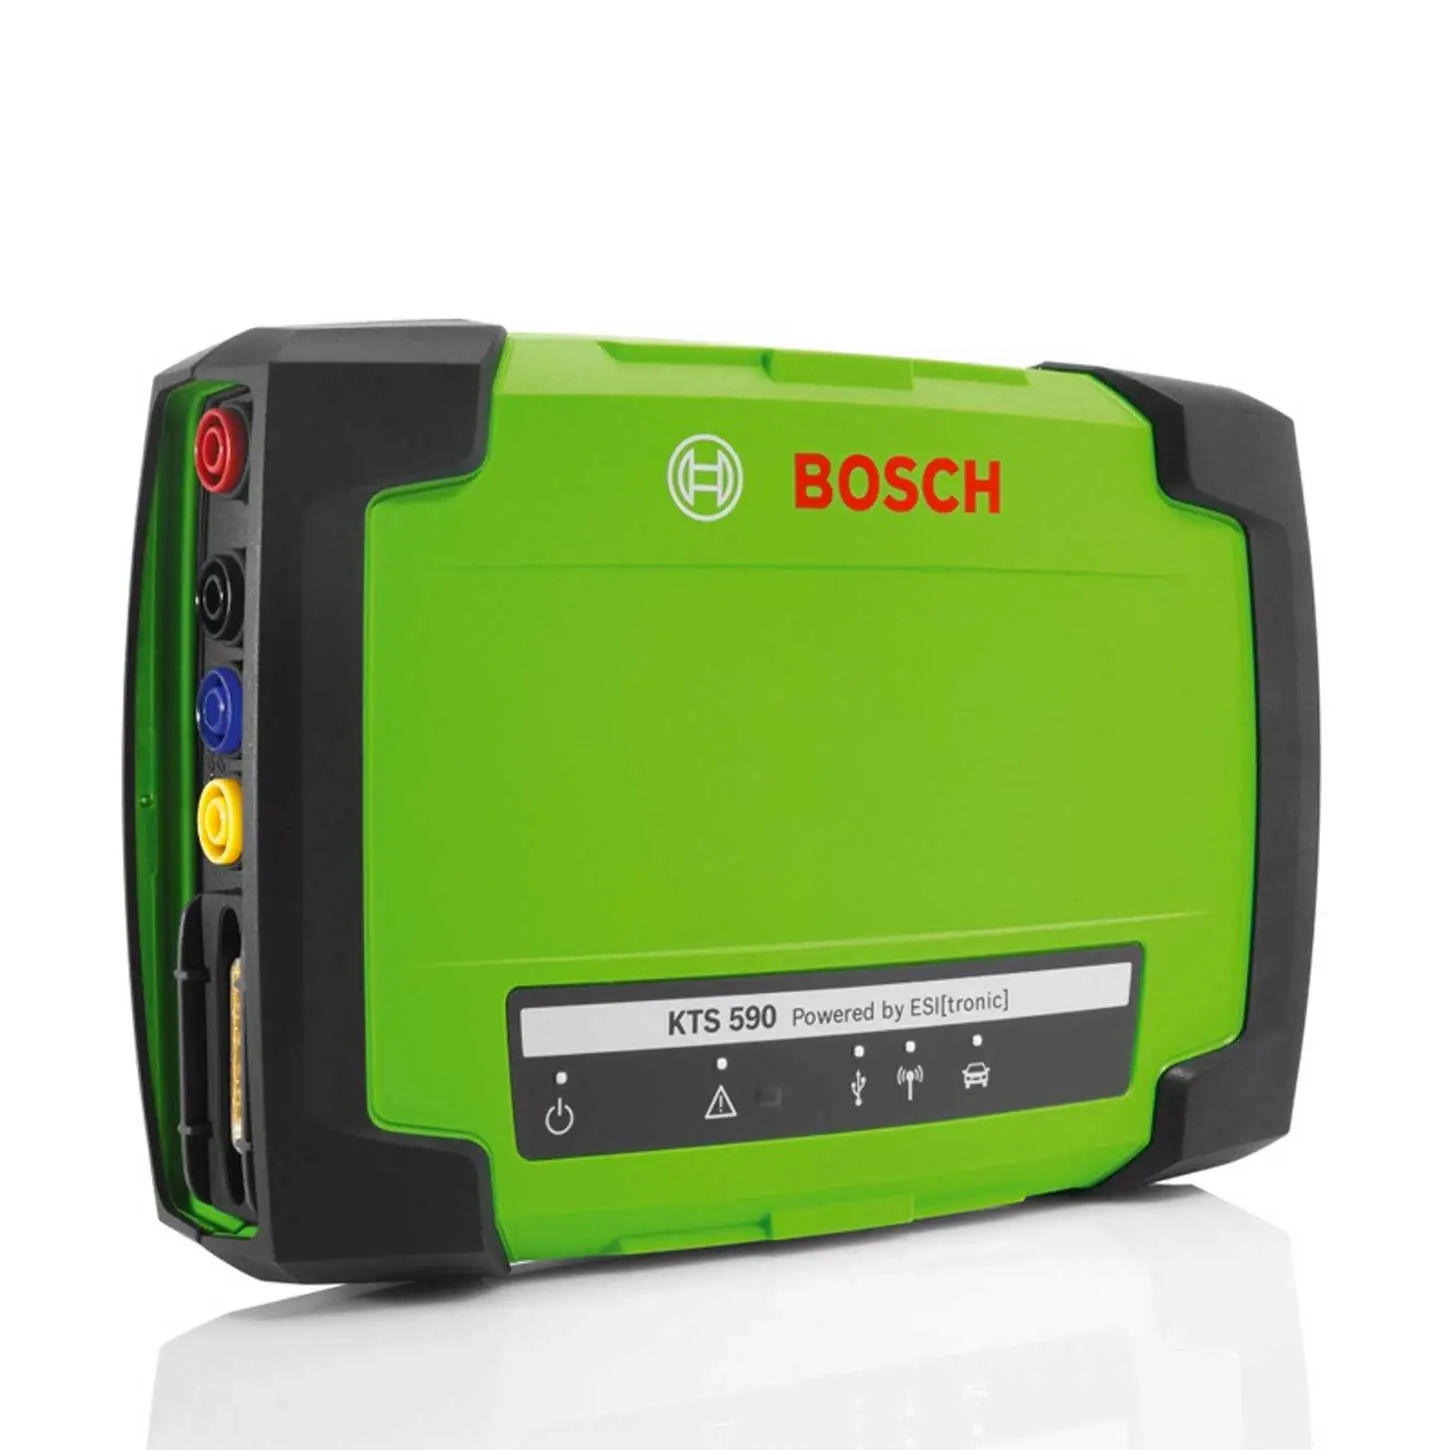 Tester diagnoza auto profesionala BOSCH KTS 590 wireless